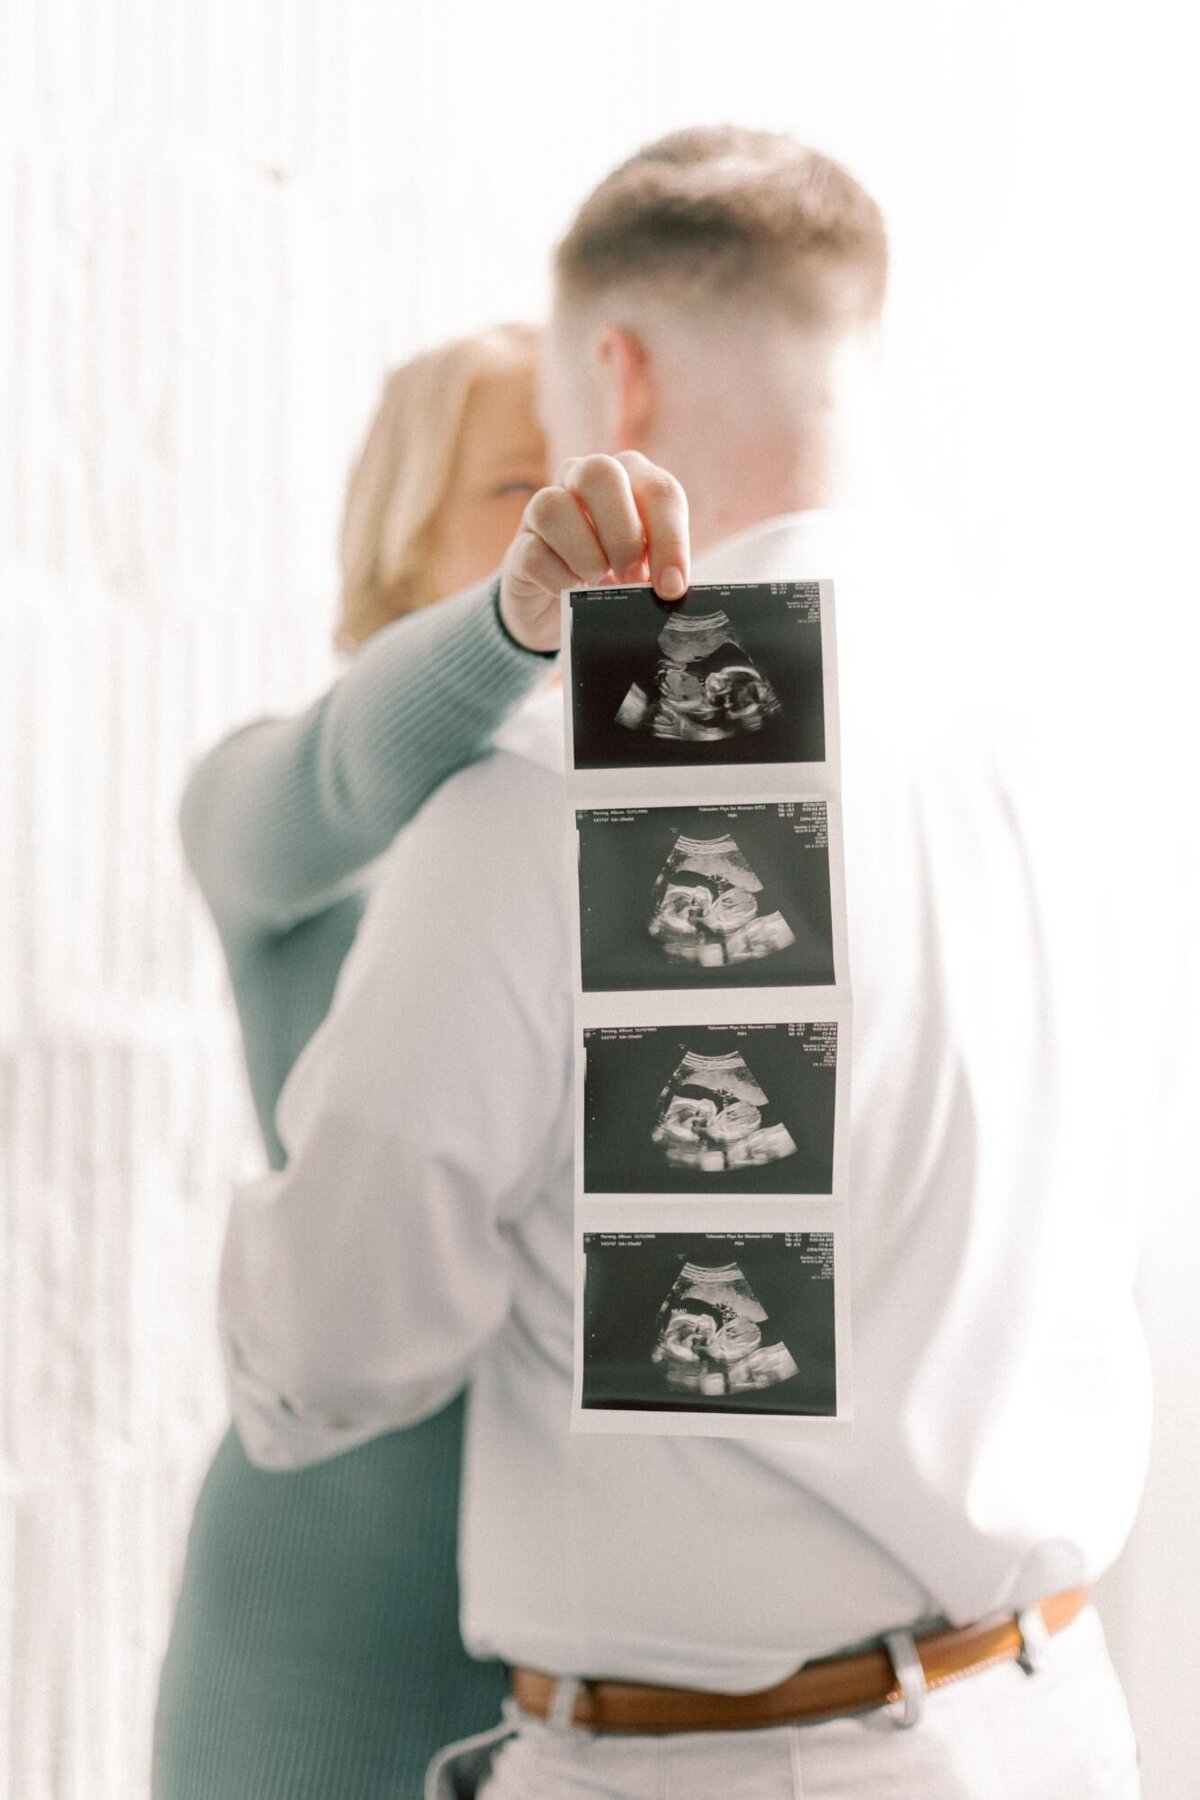 Woman kisses man holding a pregnancy ultrasound.